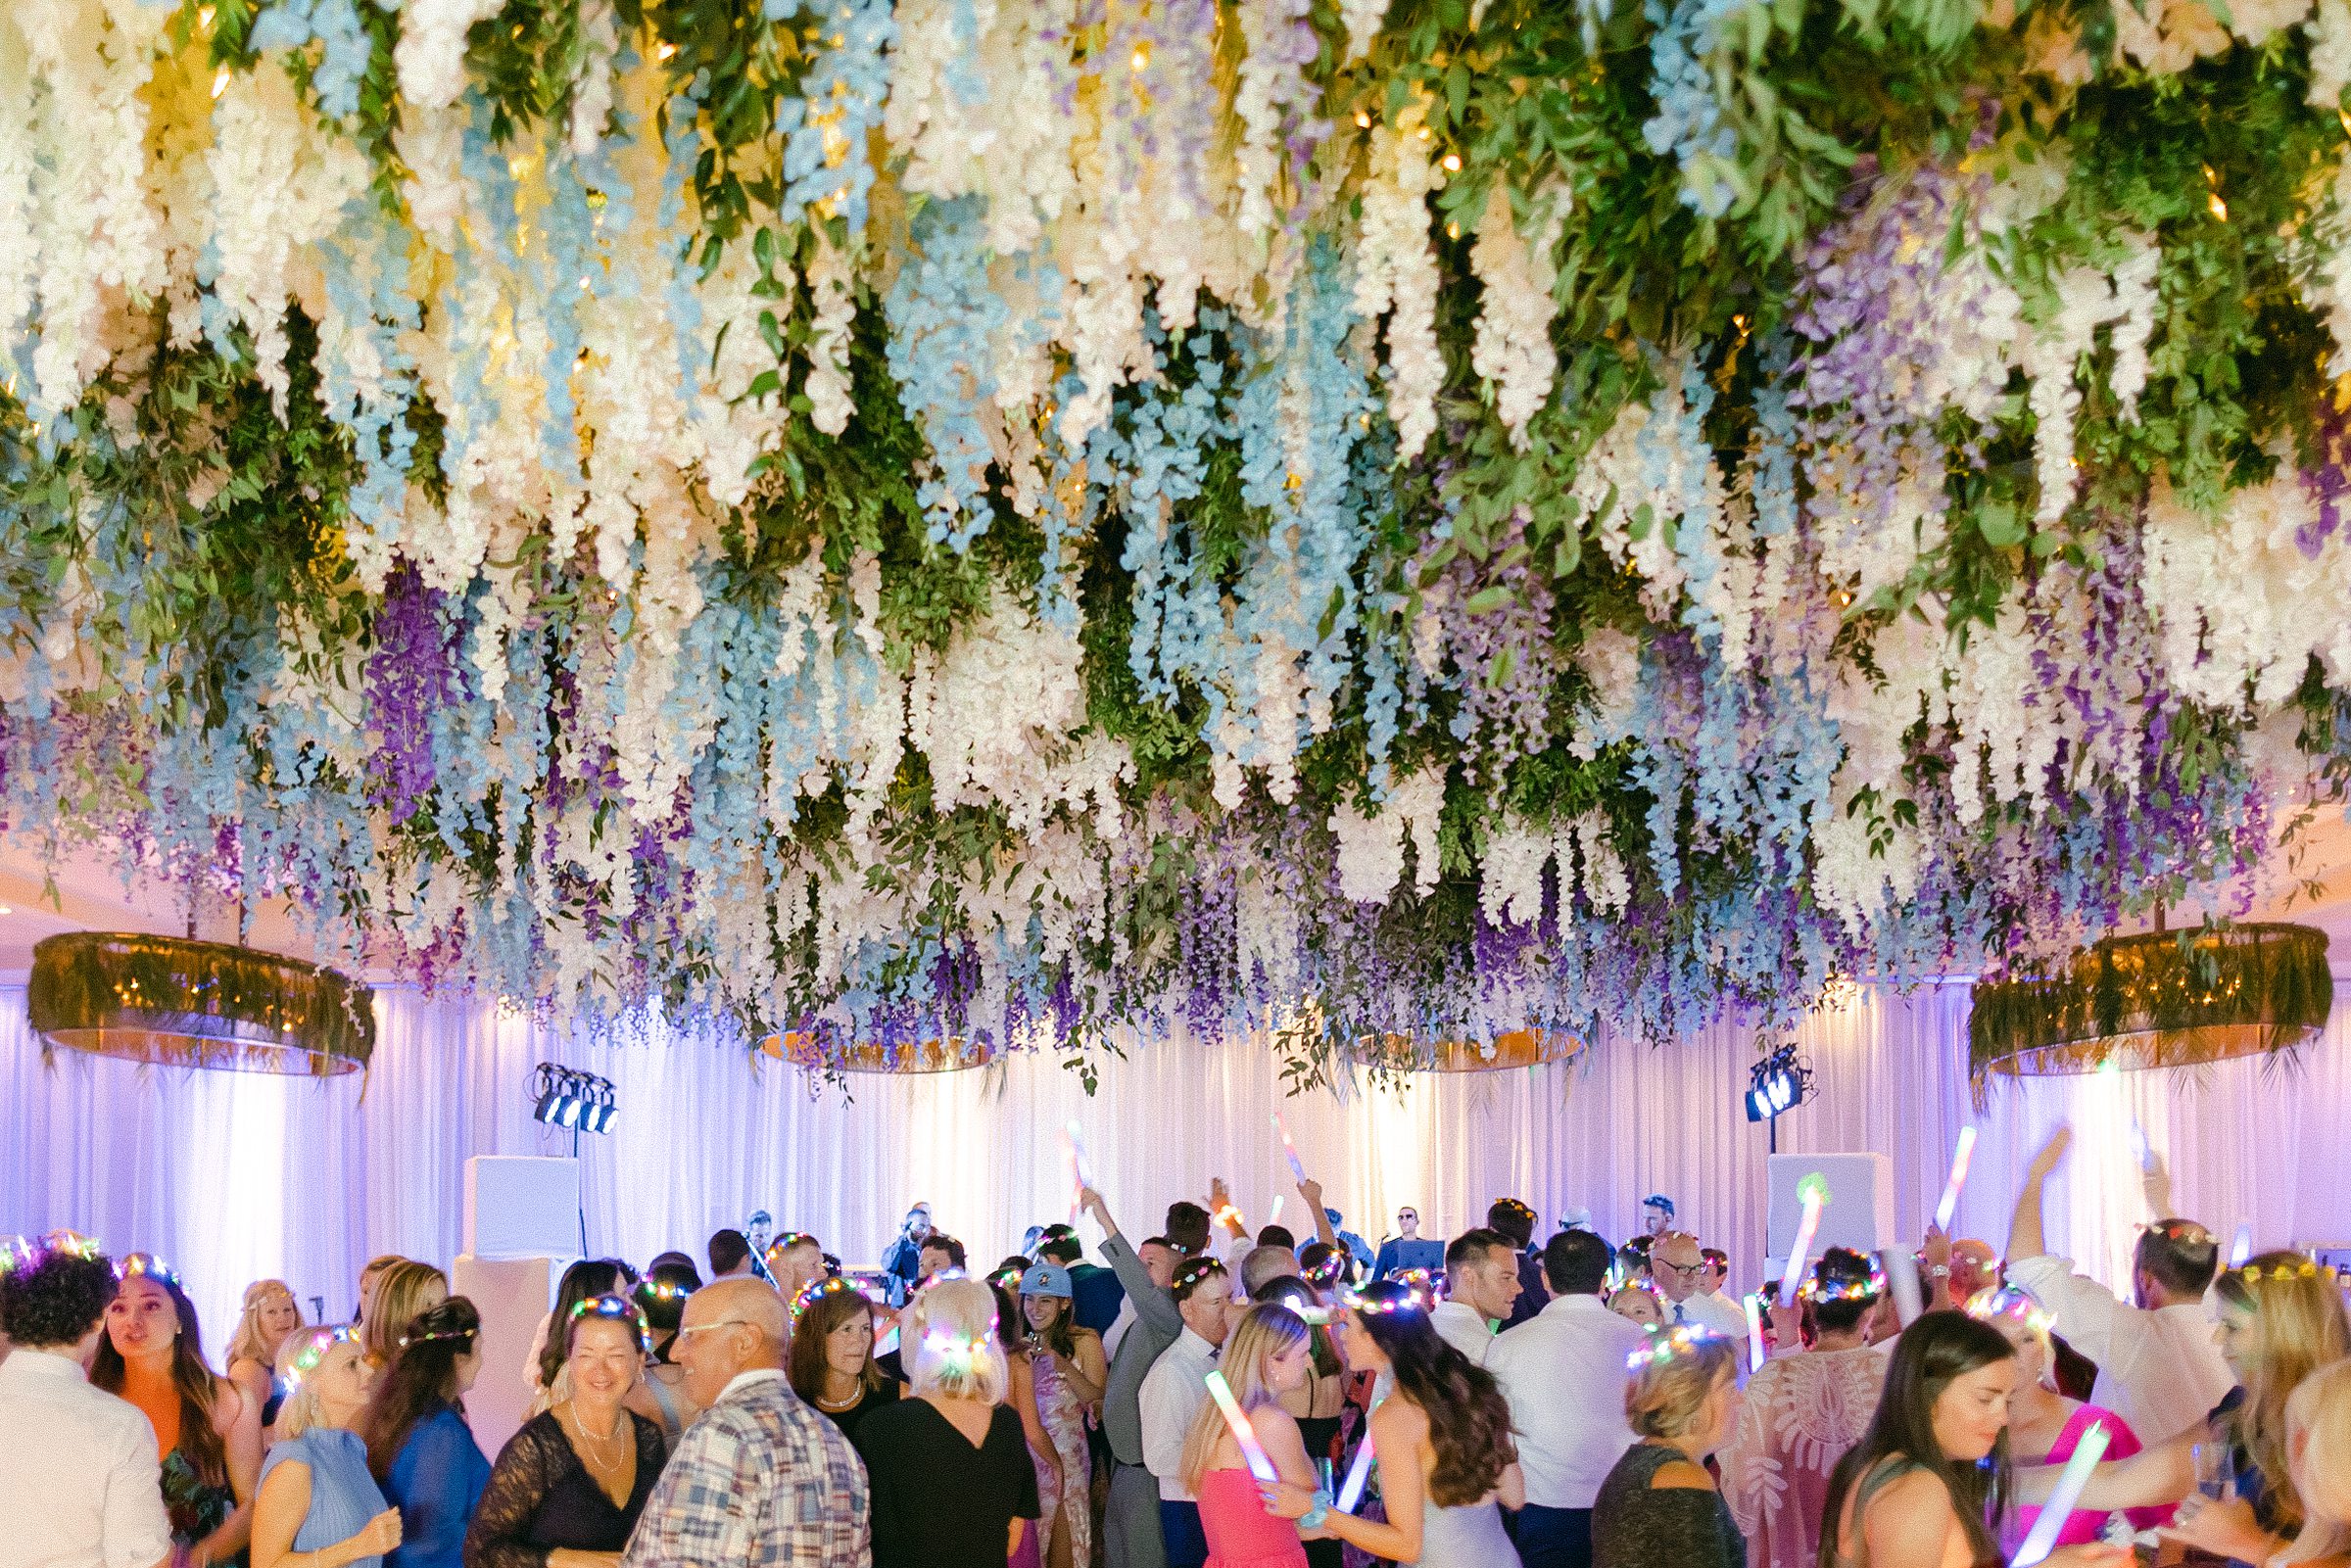 Open reception dancing hora loca under the Wisteria flower ceiling installation